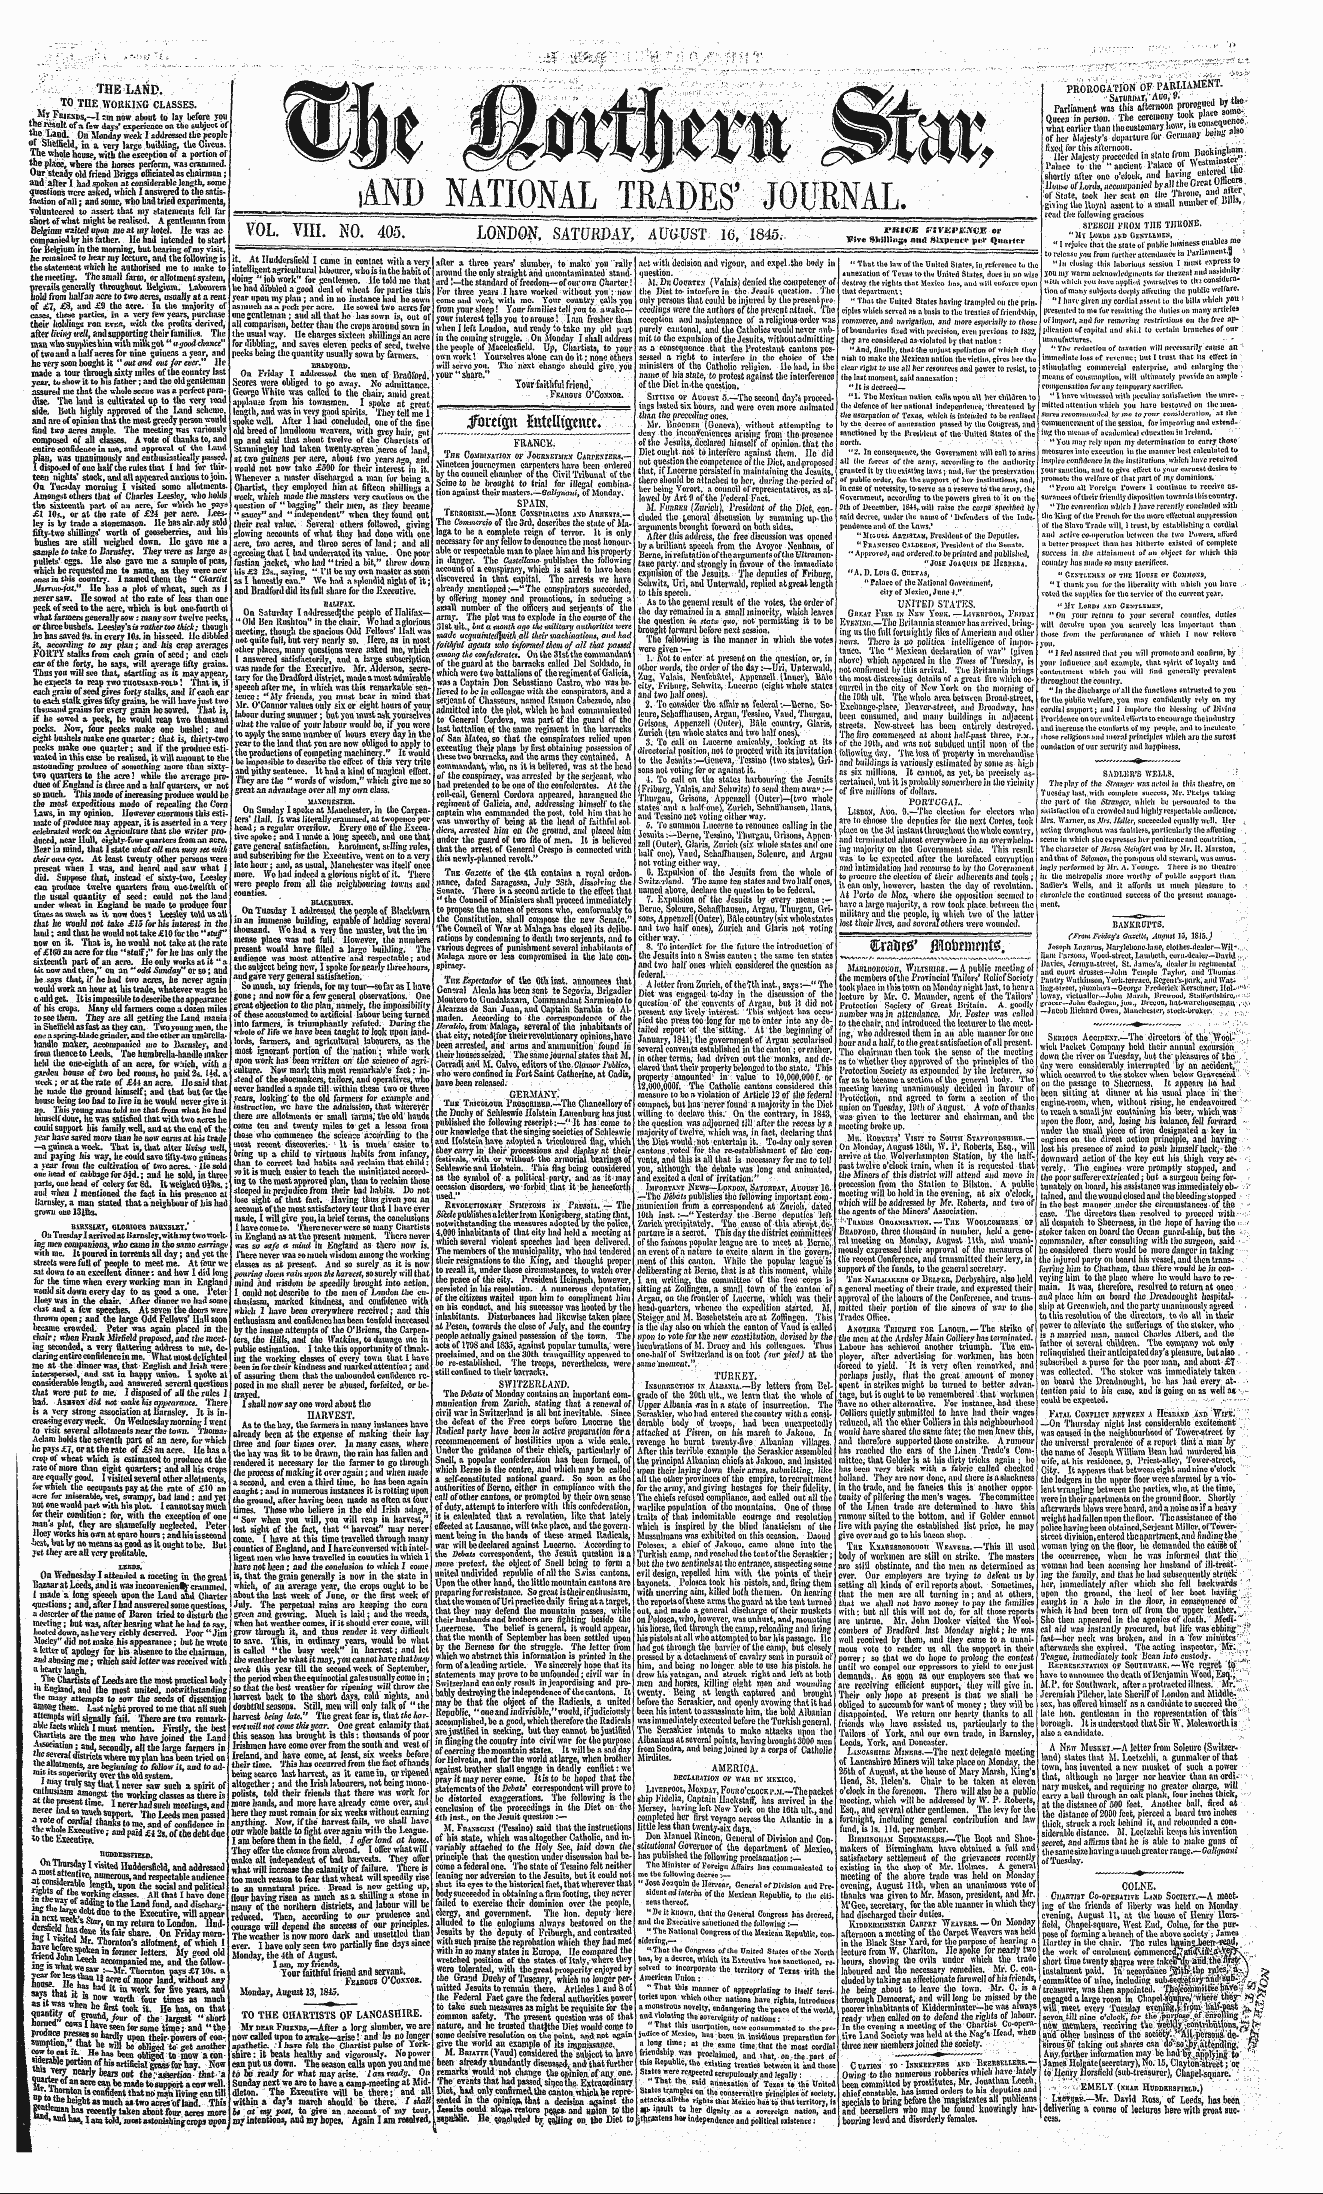 Northern Star (1837-1852): jS F Y, 3rd edition - Ss Hpinsj»En--»Eau, , Nceoan^Utahwv Akef...